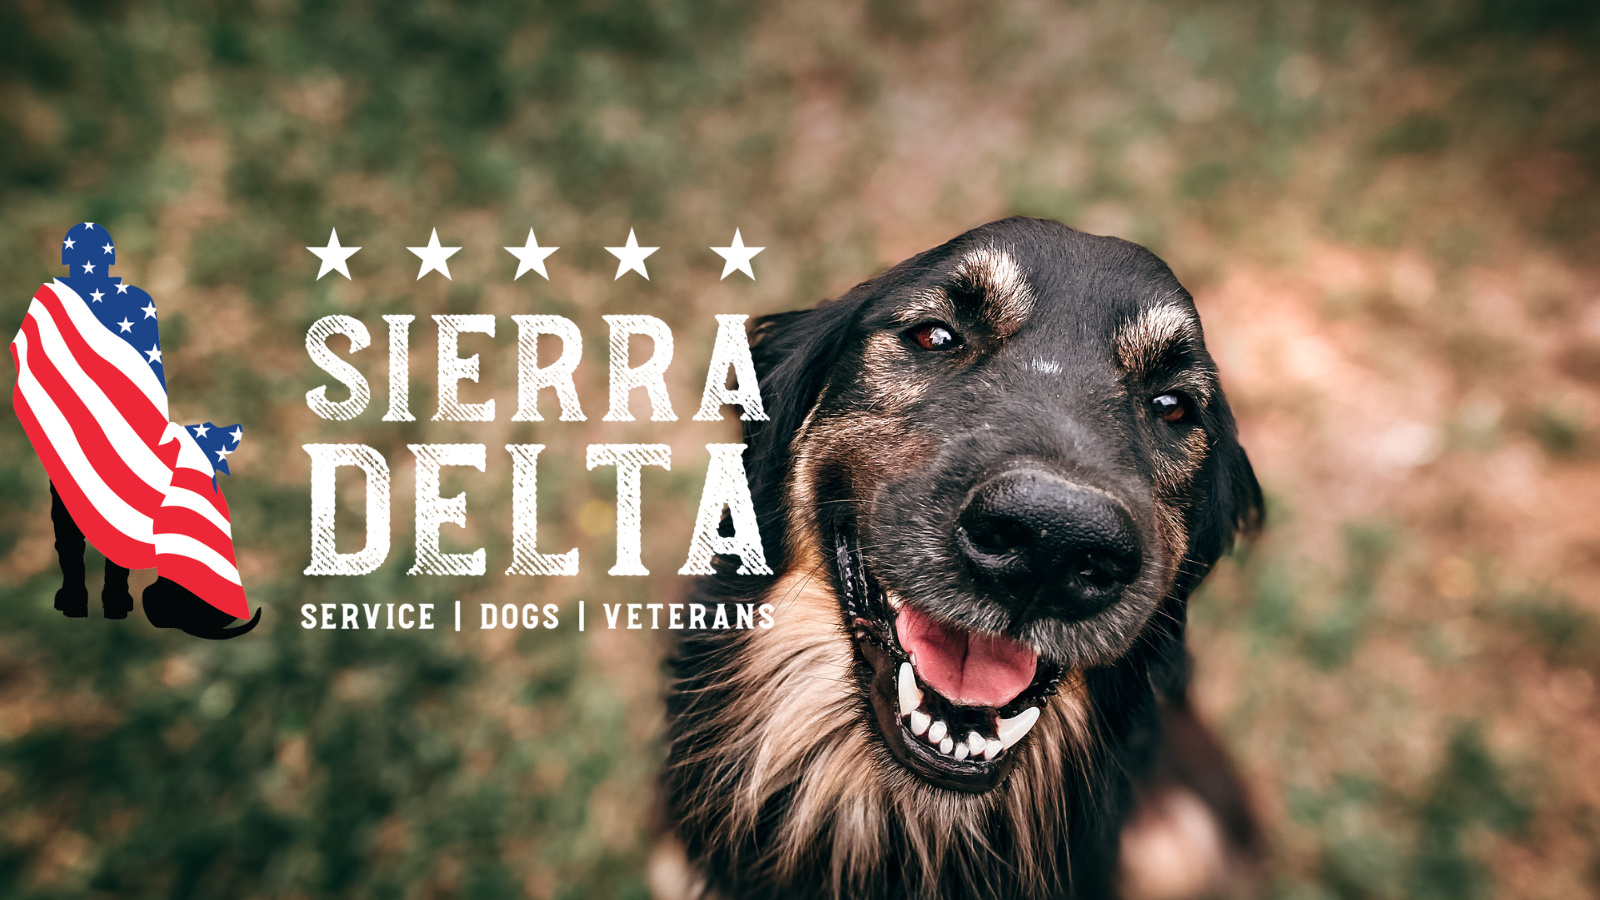 Sierra Delta helps veterans obtain service dogs